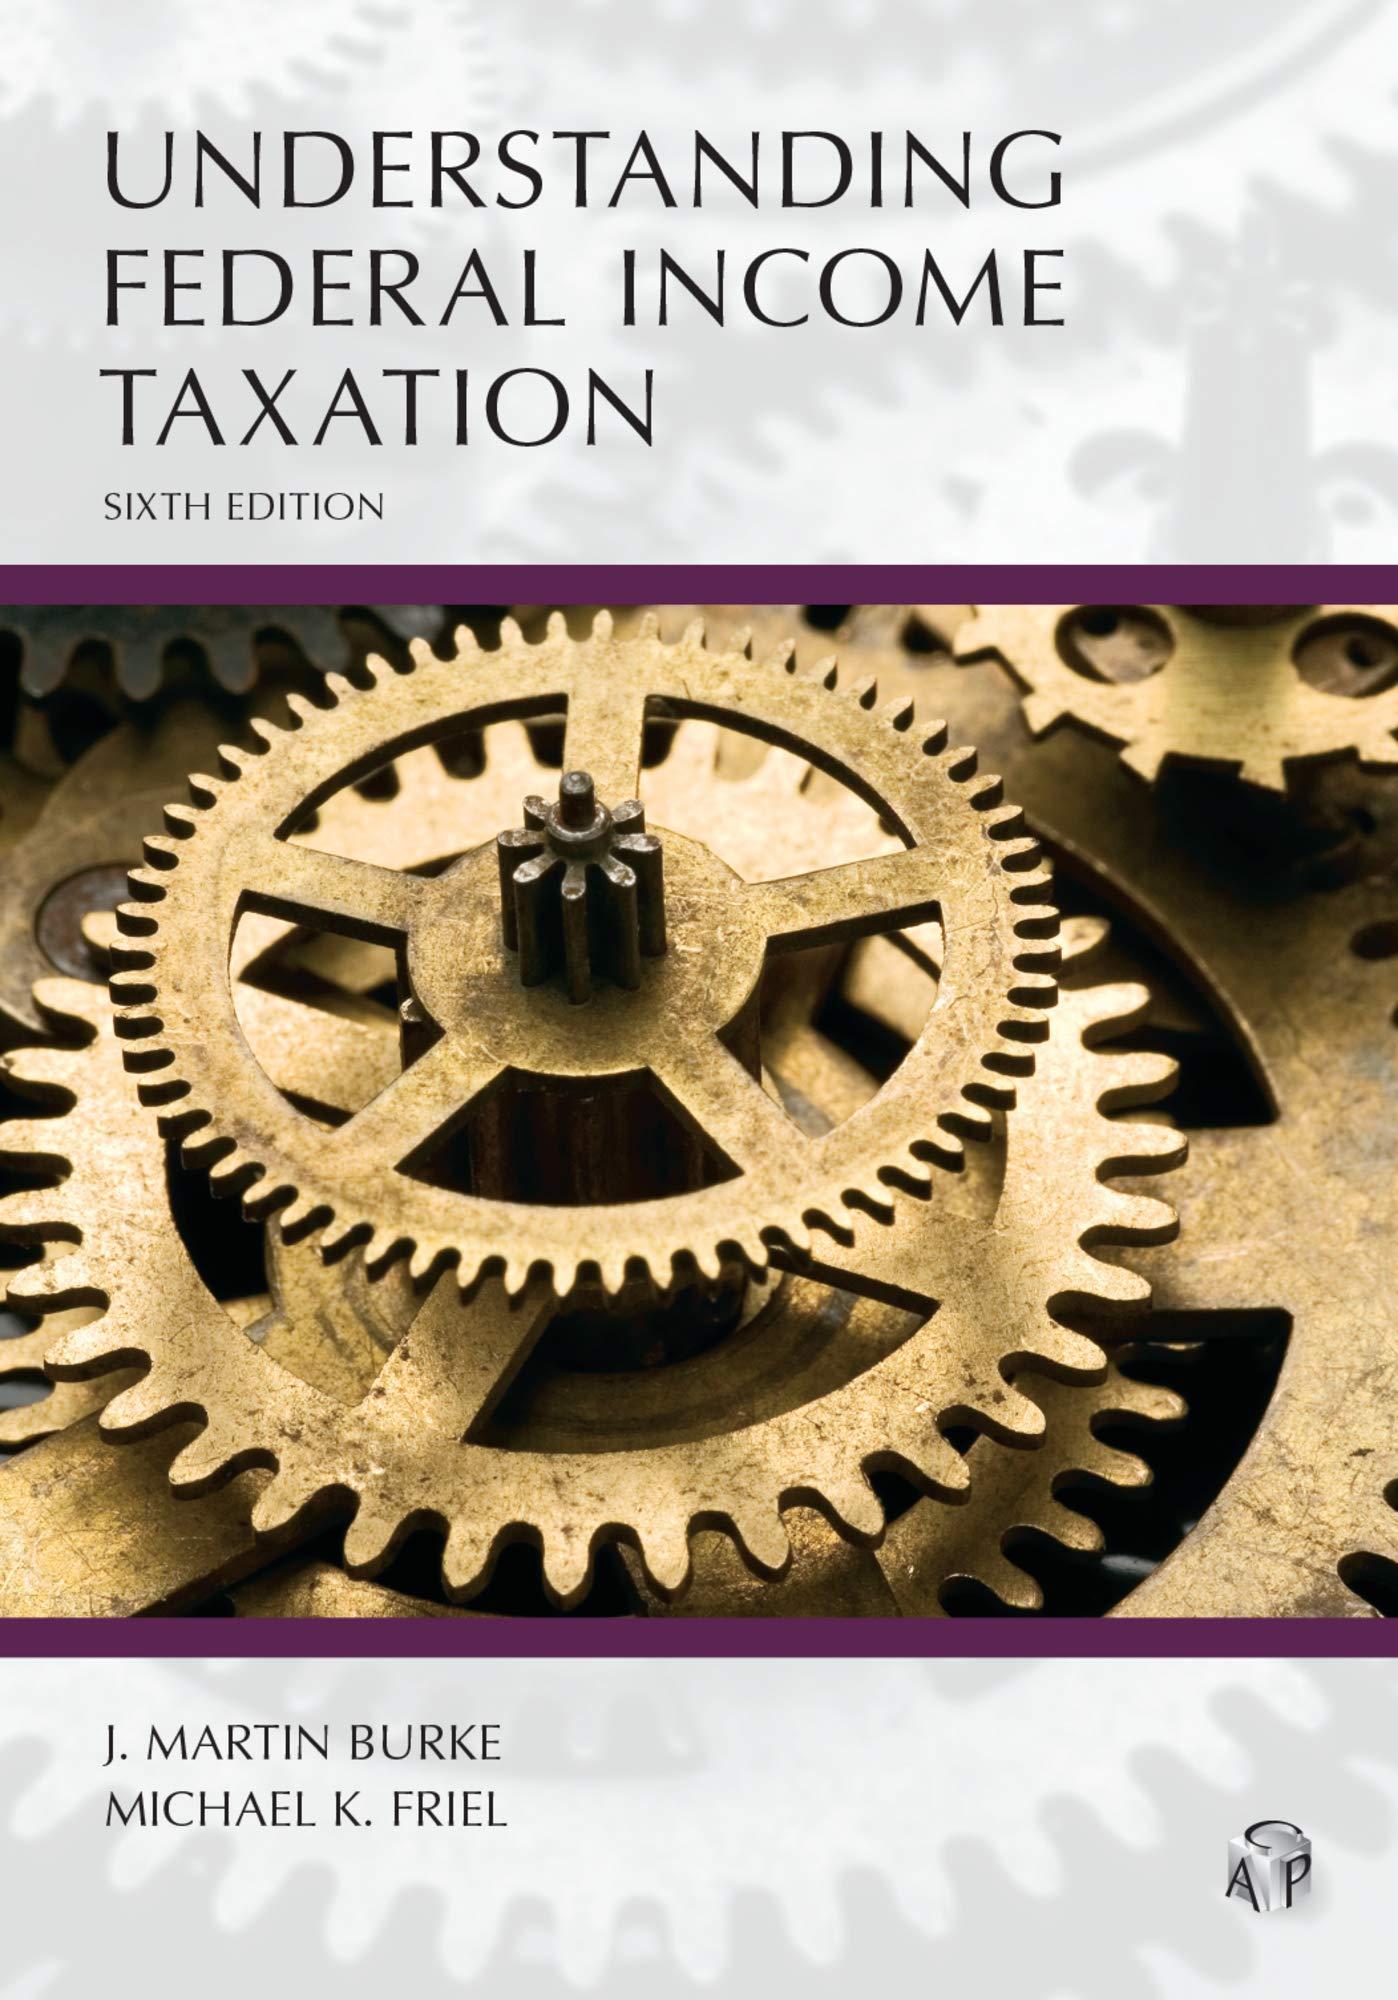 understanding federal income taxation 6th edition j. martin burke, michael friel 1531014593, 9781531014599